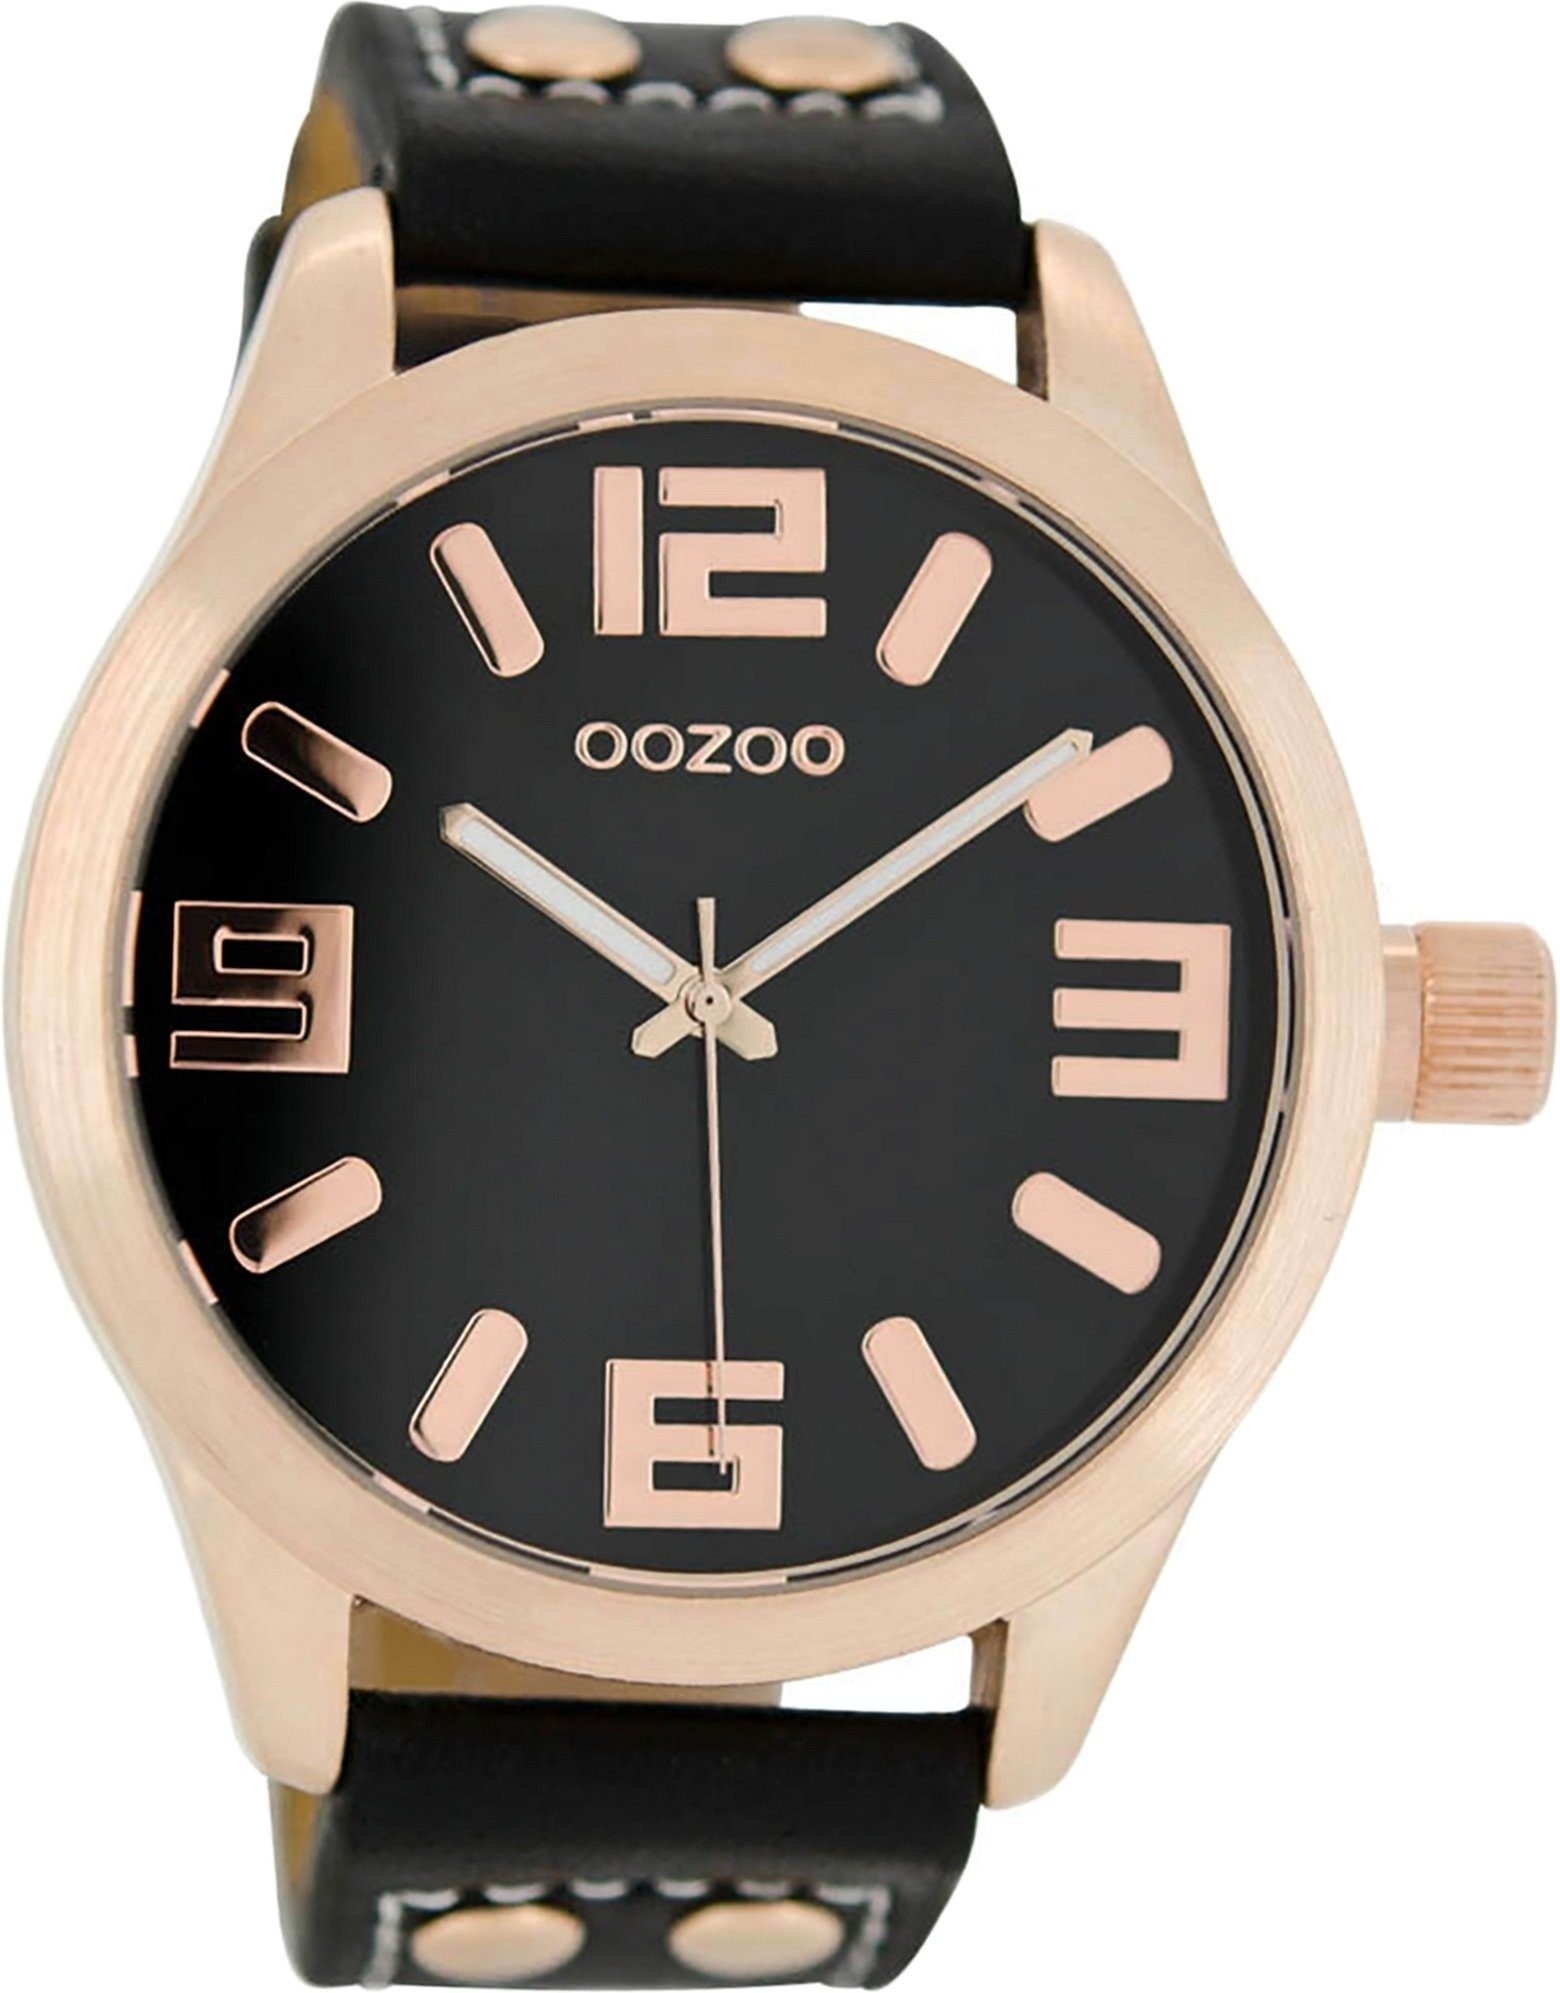 Damen Uhren OOZOO Quarzuhr D2UOC1159 Oozoo Quarz-Uhr Damen rose Timepieces, Damenuhr mit Lederarmband, rundes Gehäuse, extra gro